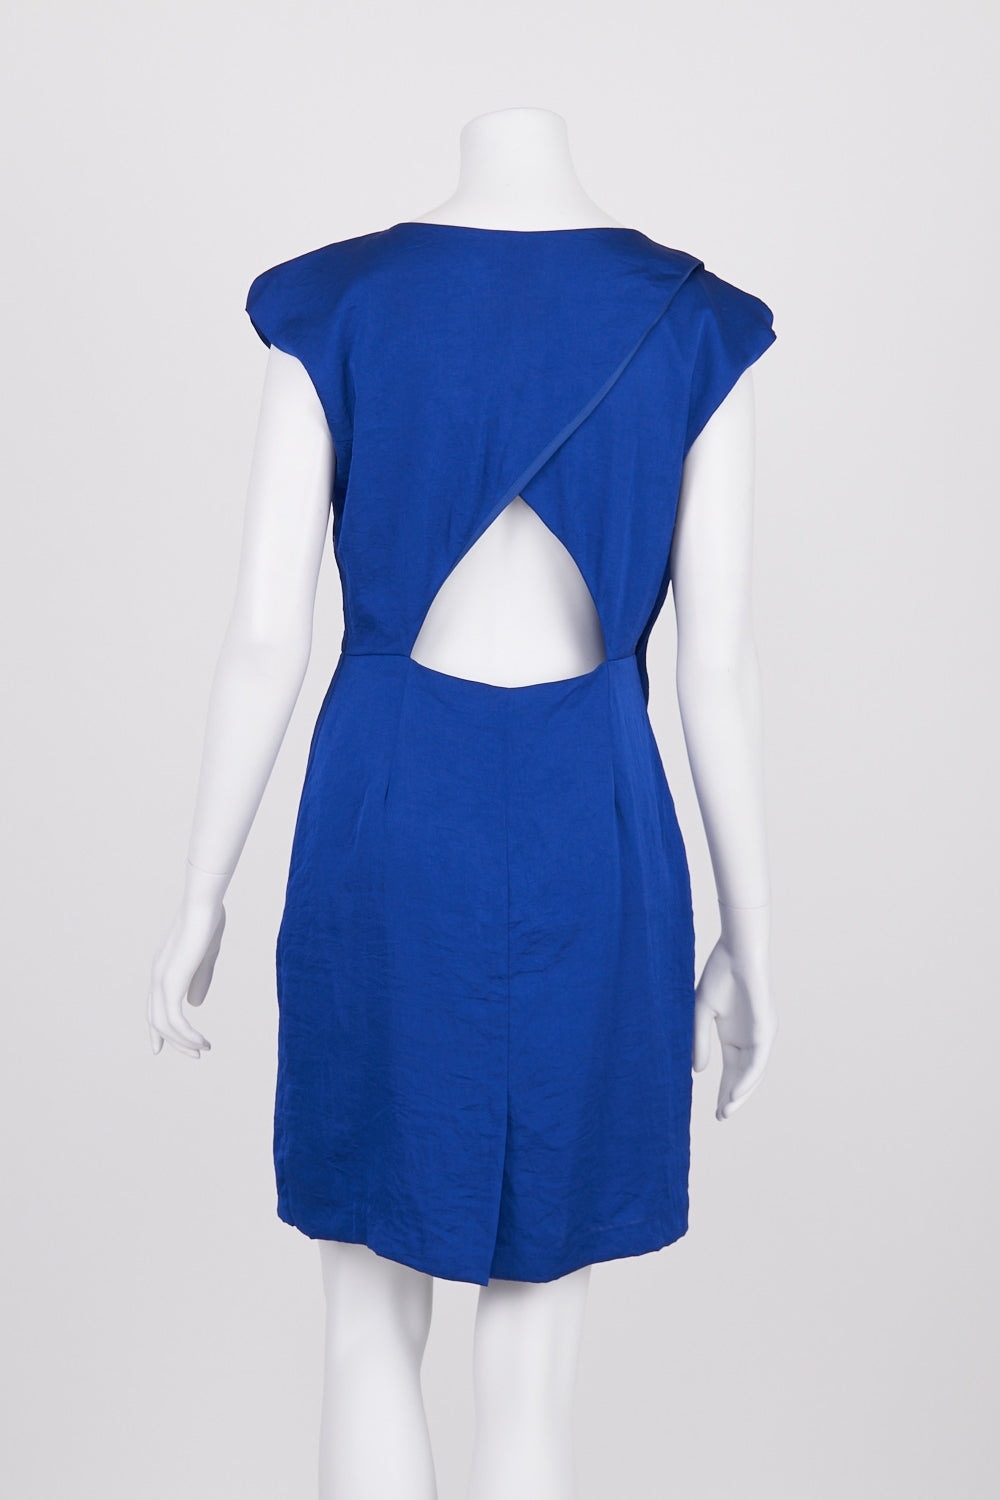 Nicola Finetti Blue Pleated Sleeveless Dress 12